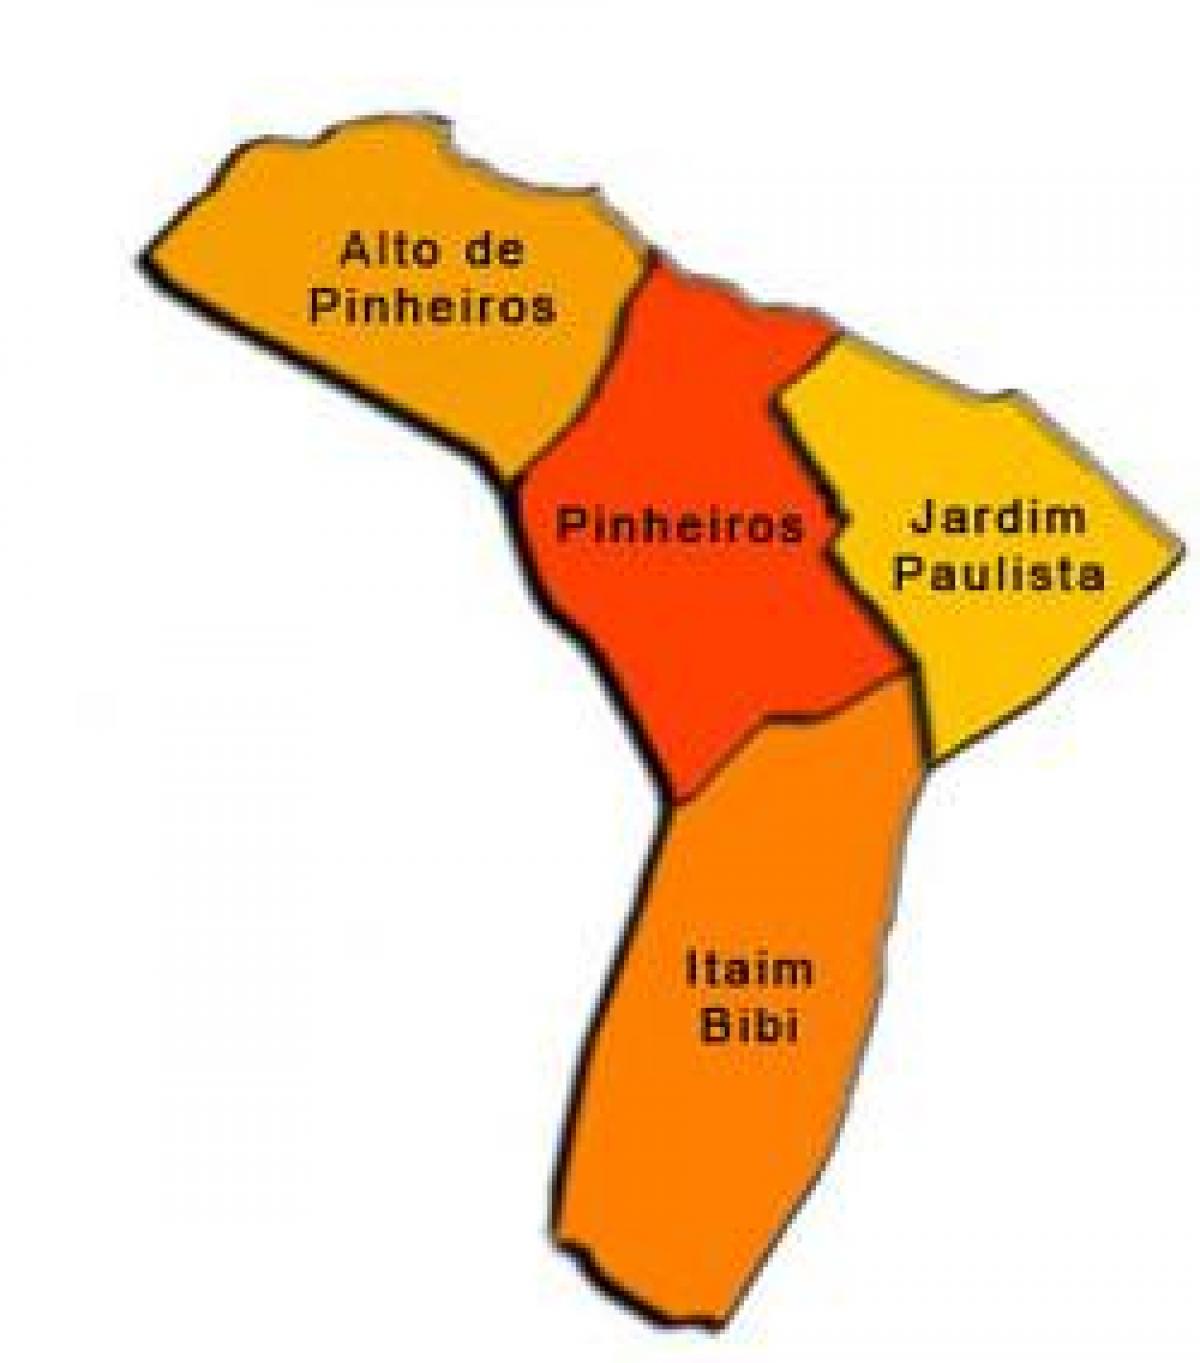 Kort af Pinheiros sub-præfekturet